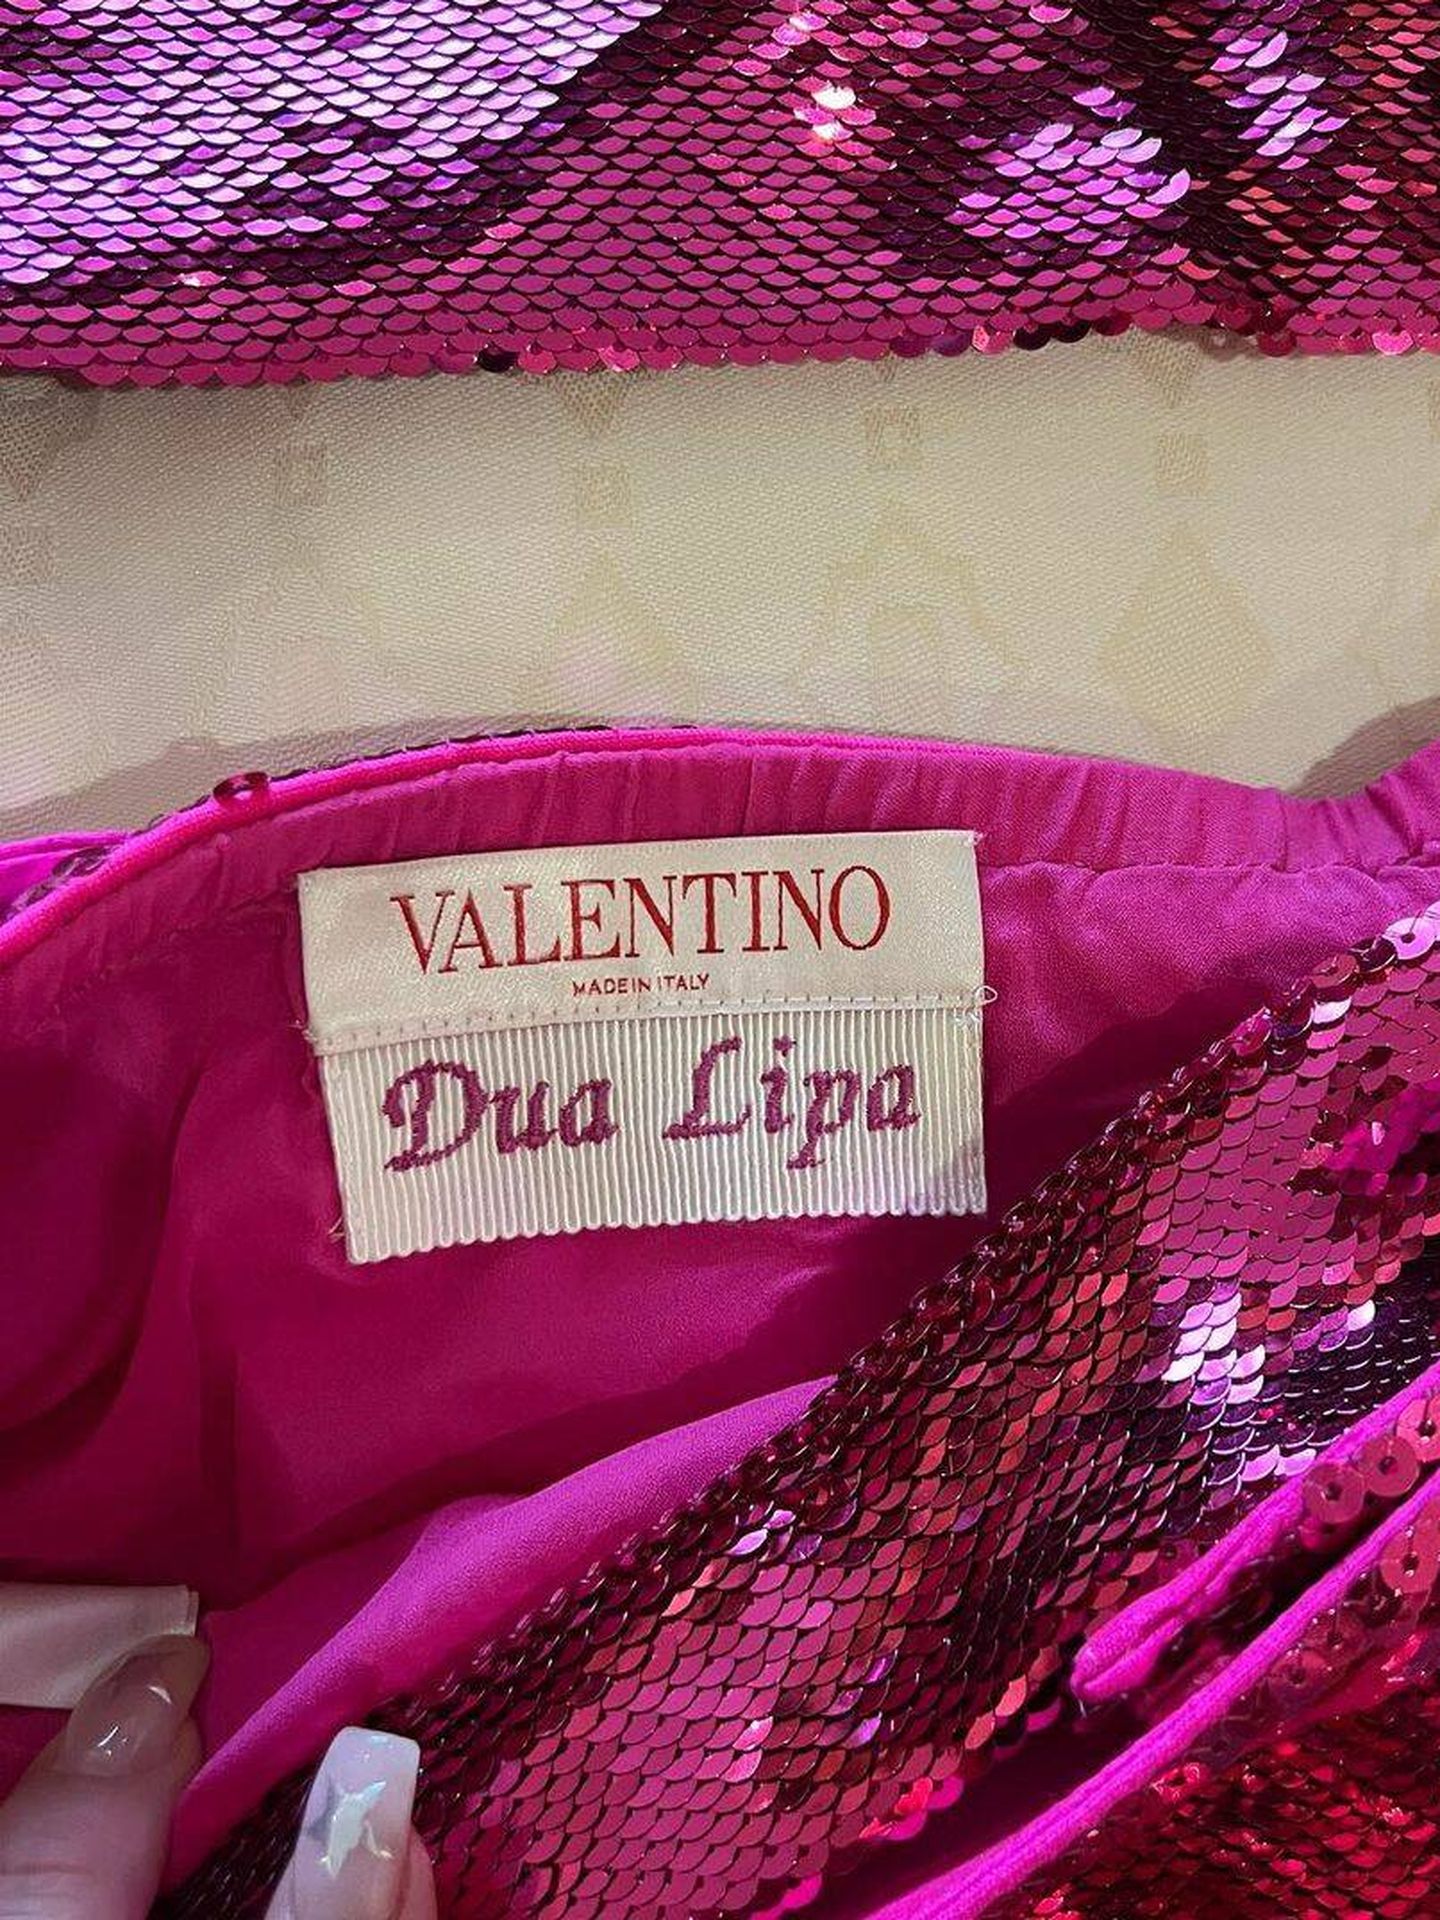 Conjunto de Valentino para Dua Lipa. (Instagram @dualipa)